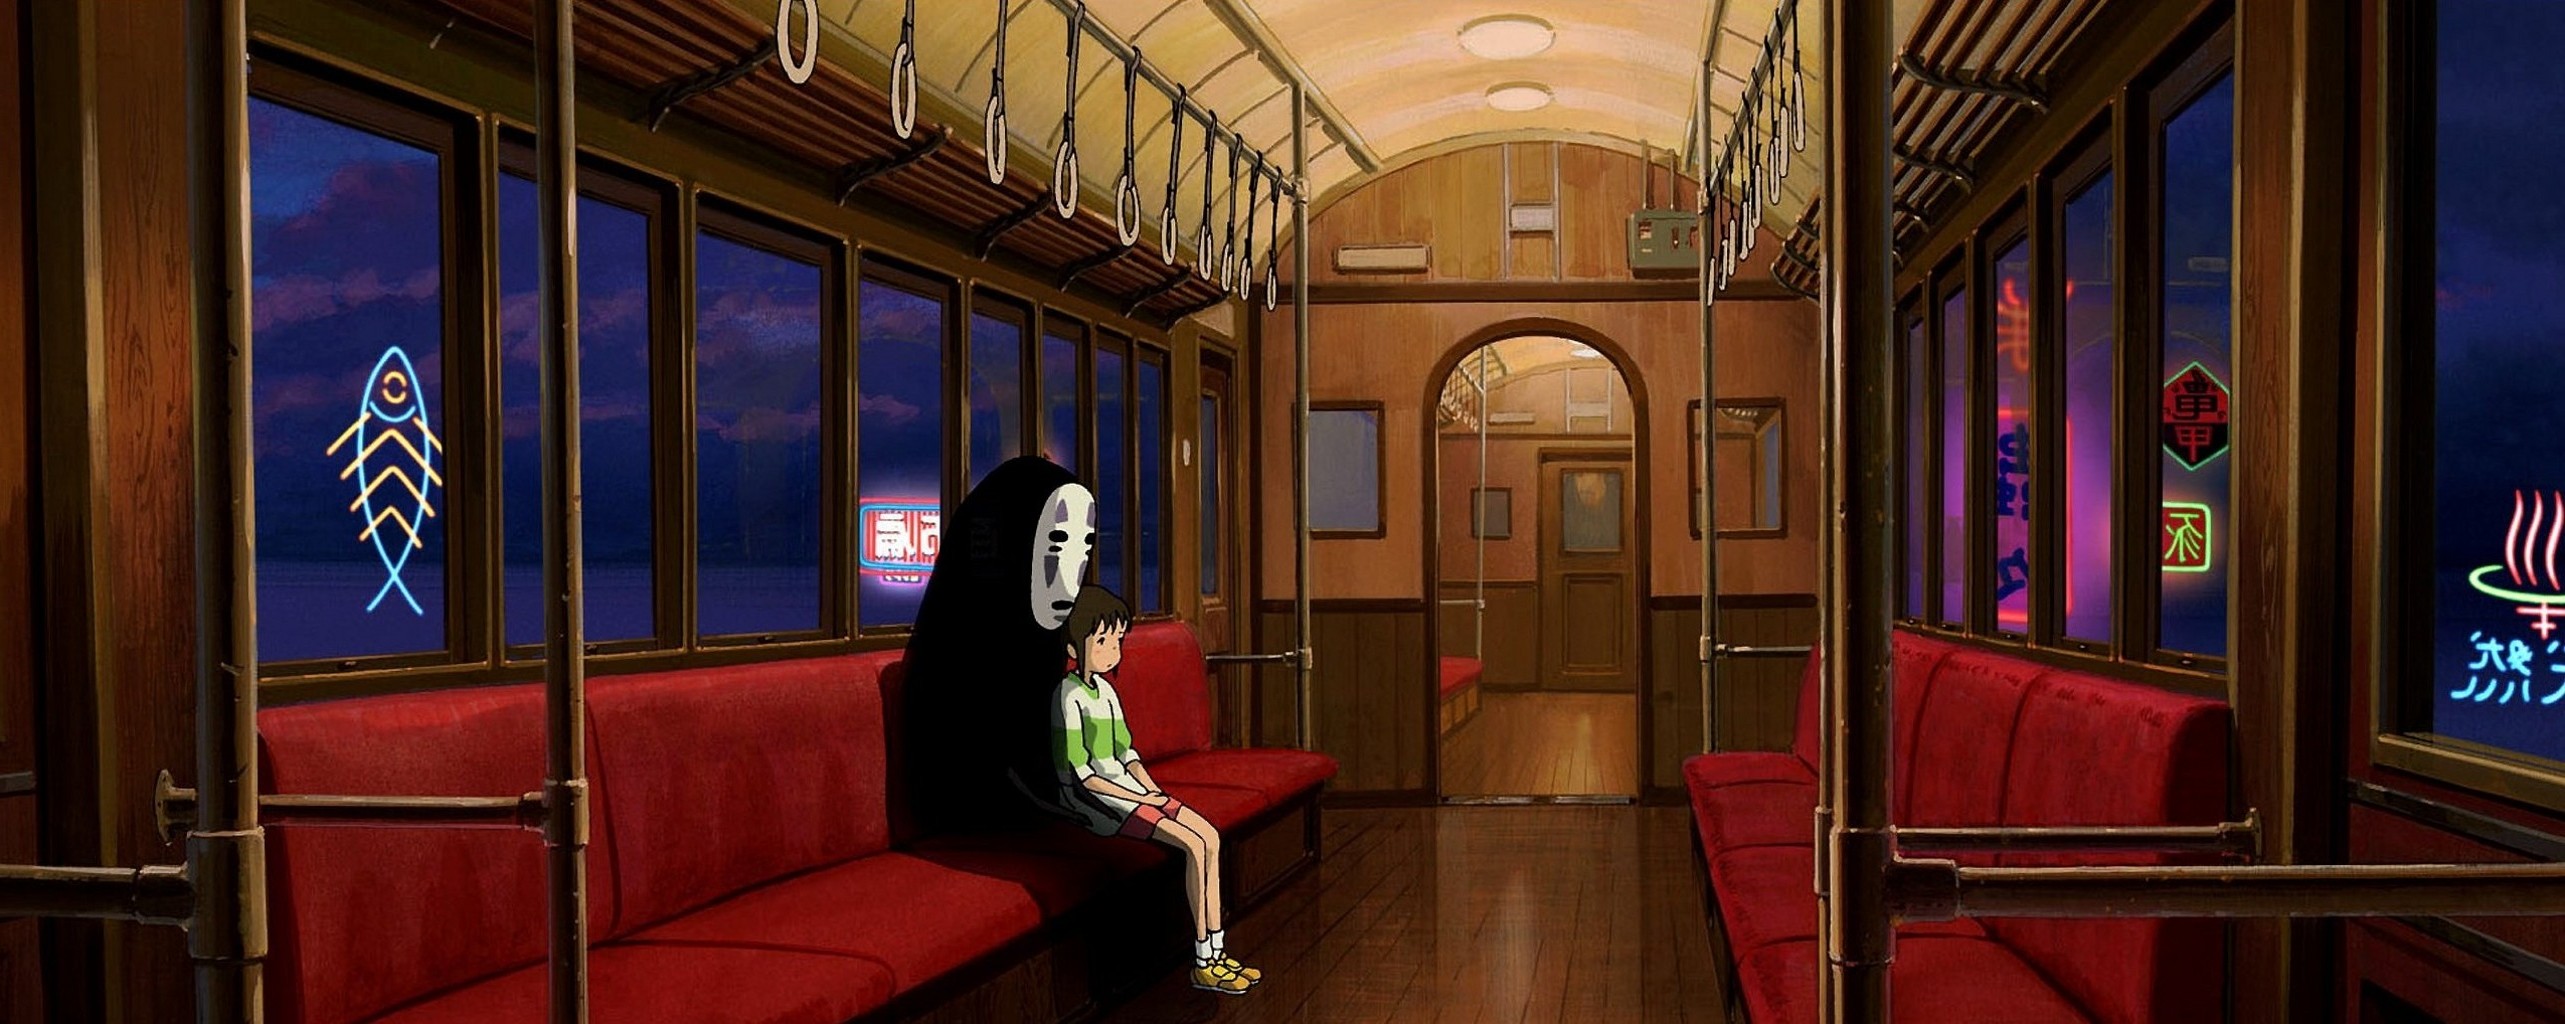 Studio Ghibli, Spirited Away, Anime Wallpaper